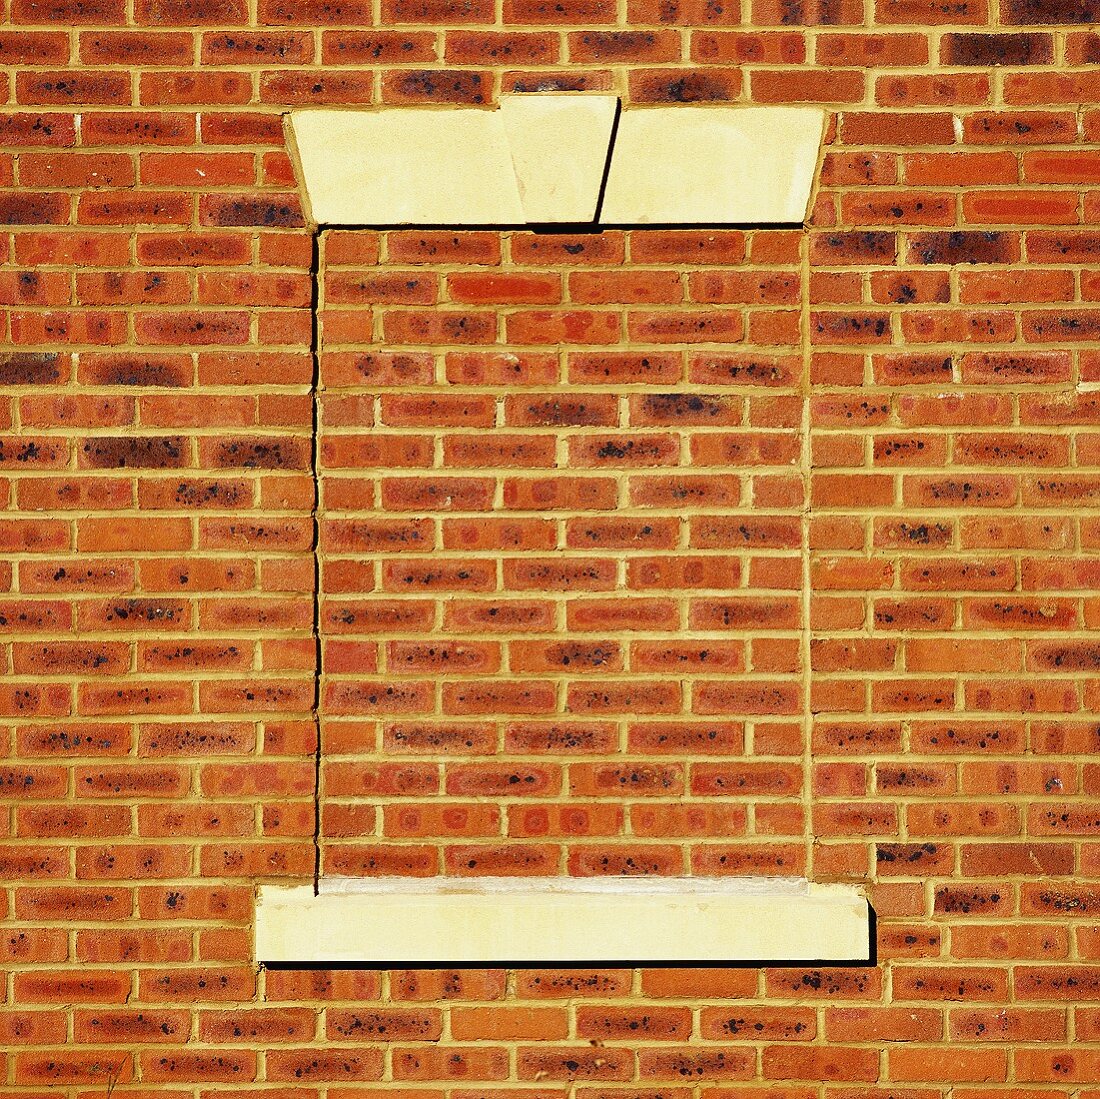 A bricked-up window